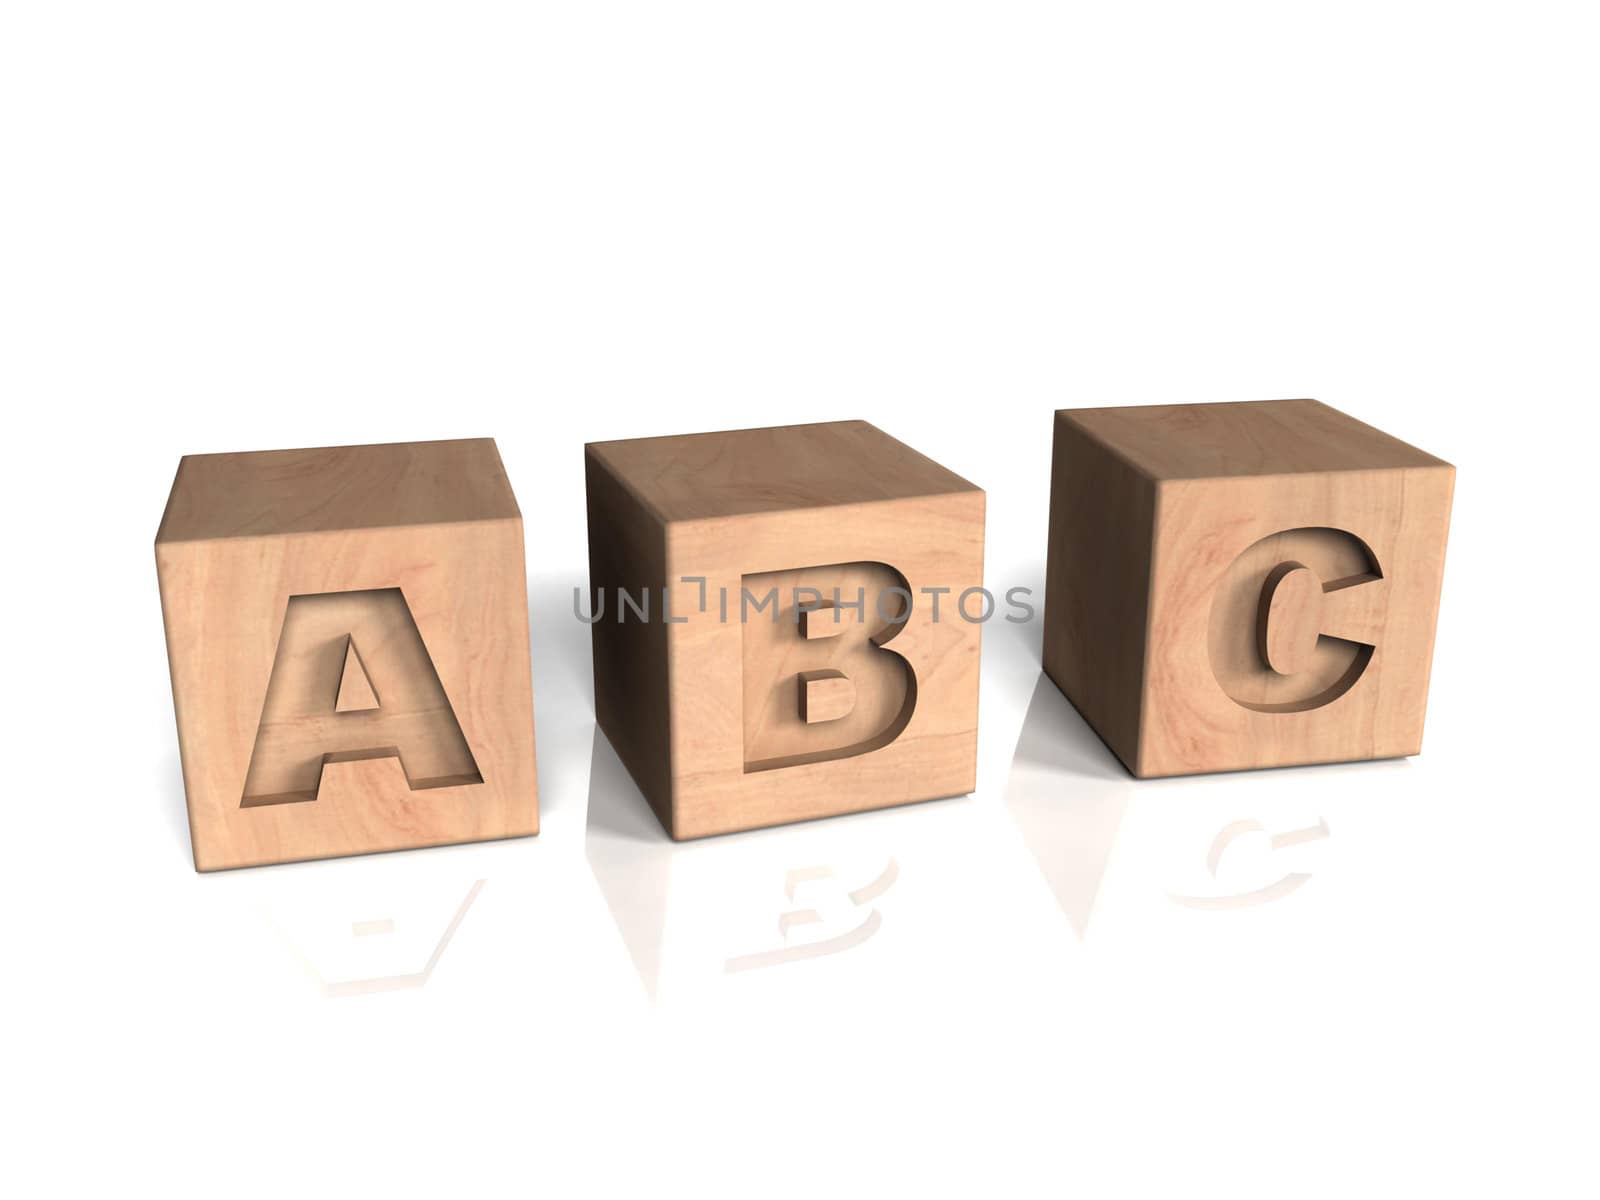 ABC wooden blocks placed horizontally